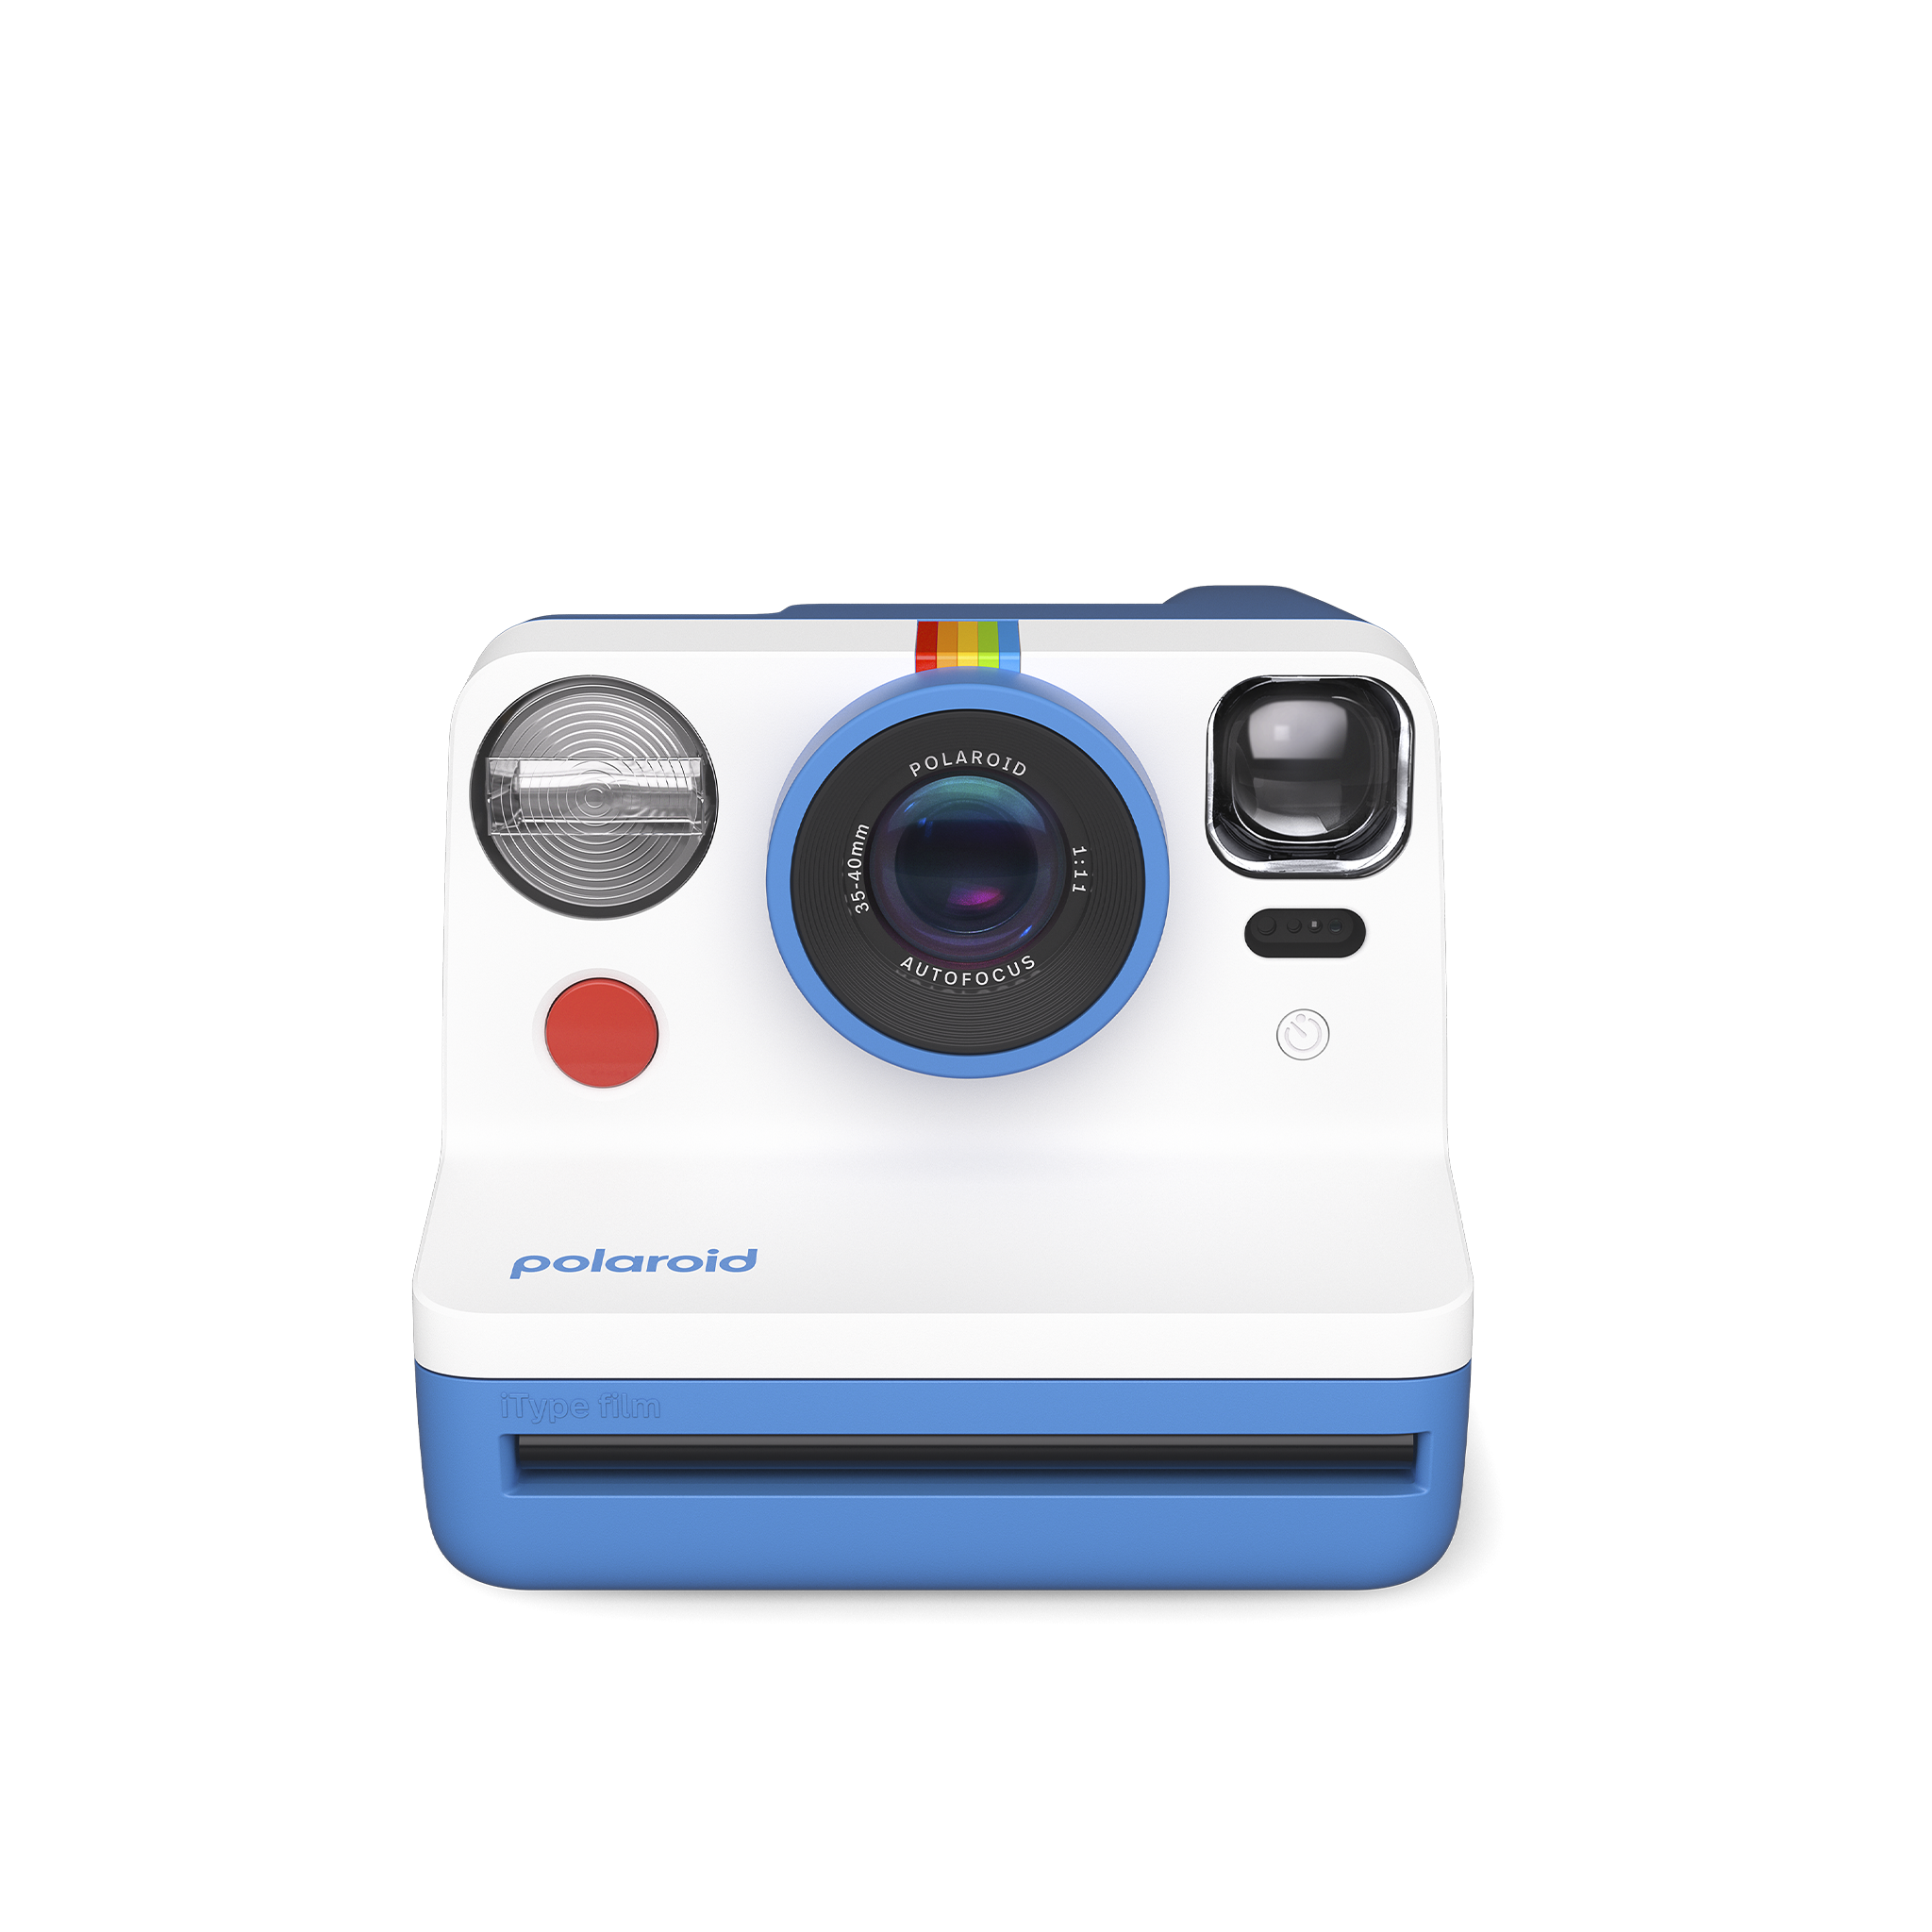 Get Your Polaroid Instant Camera | Polaroid US